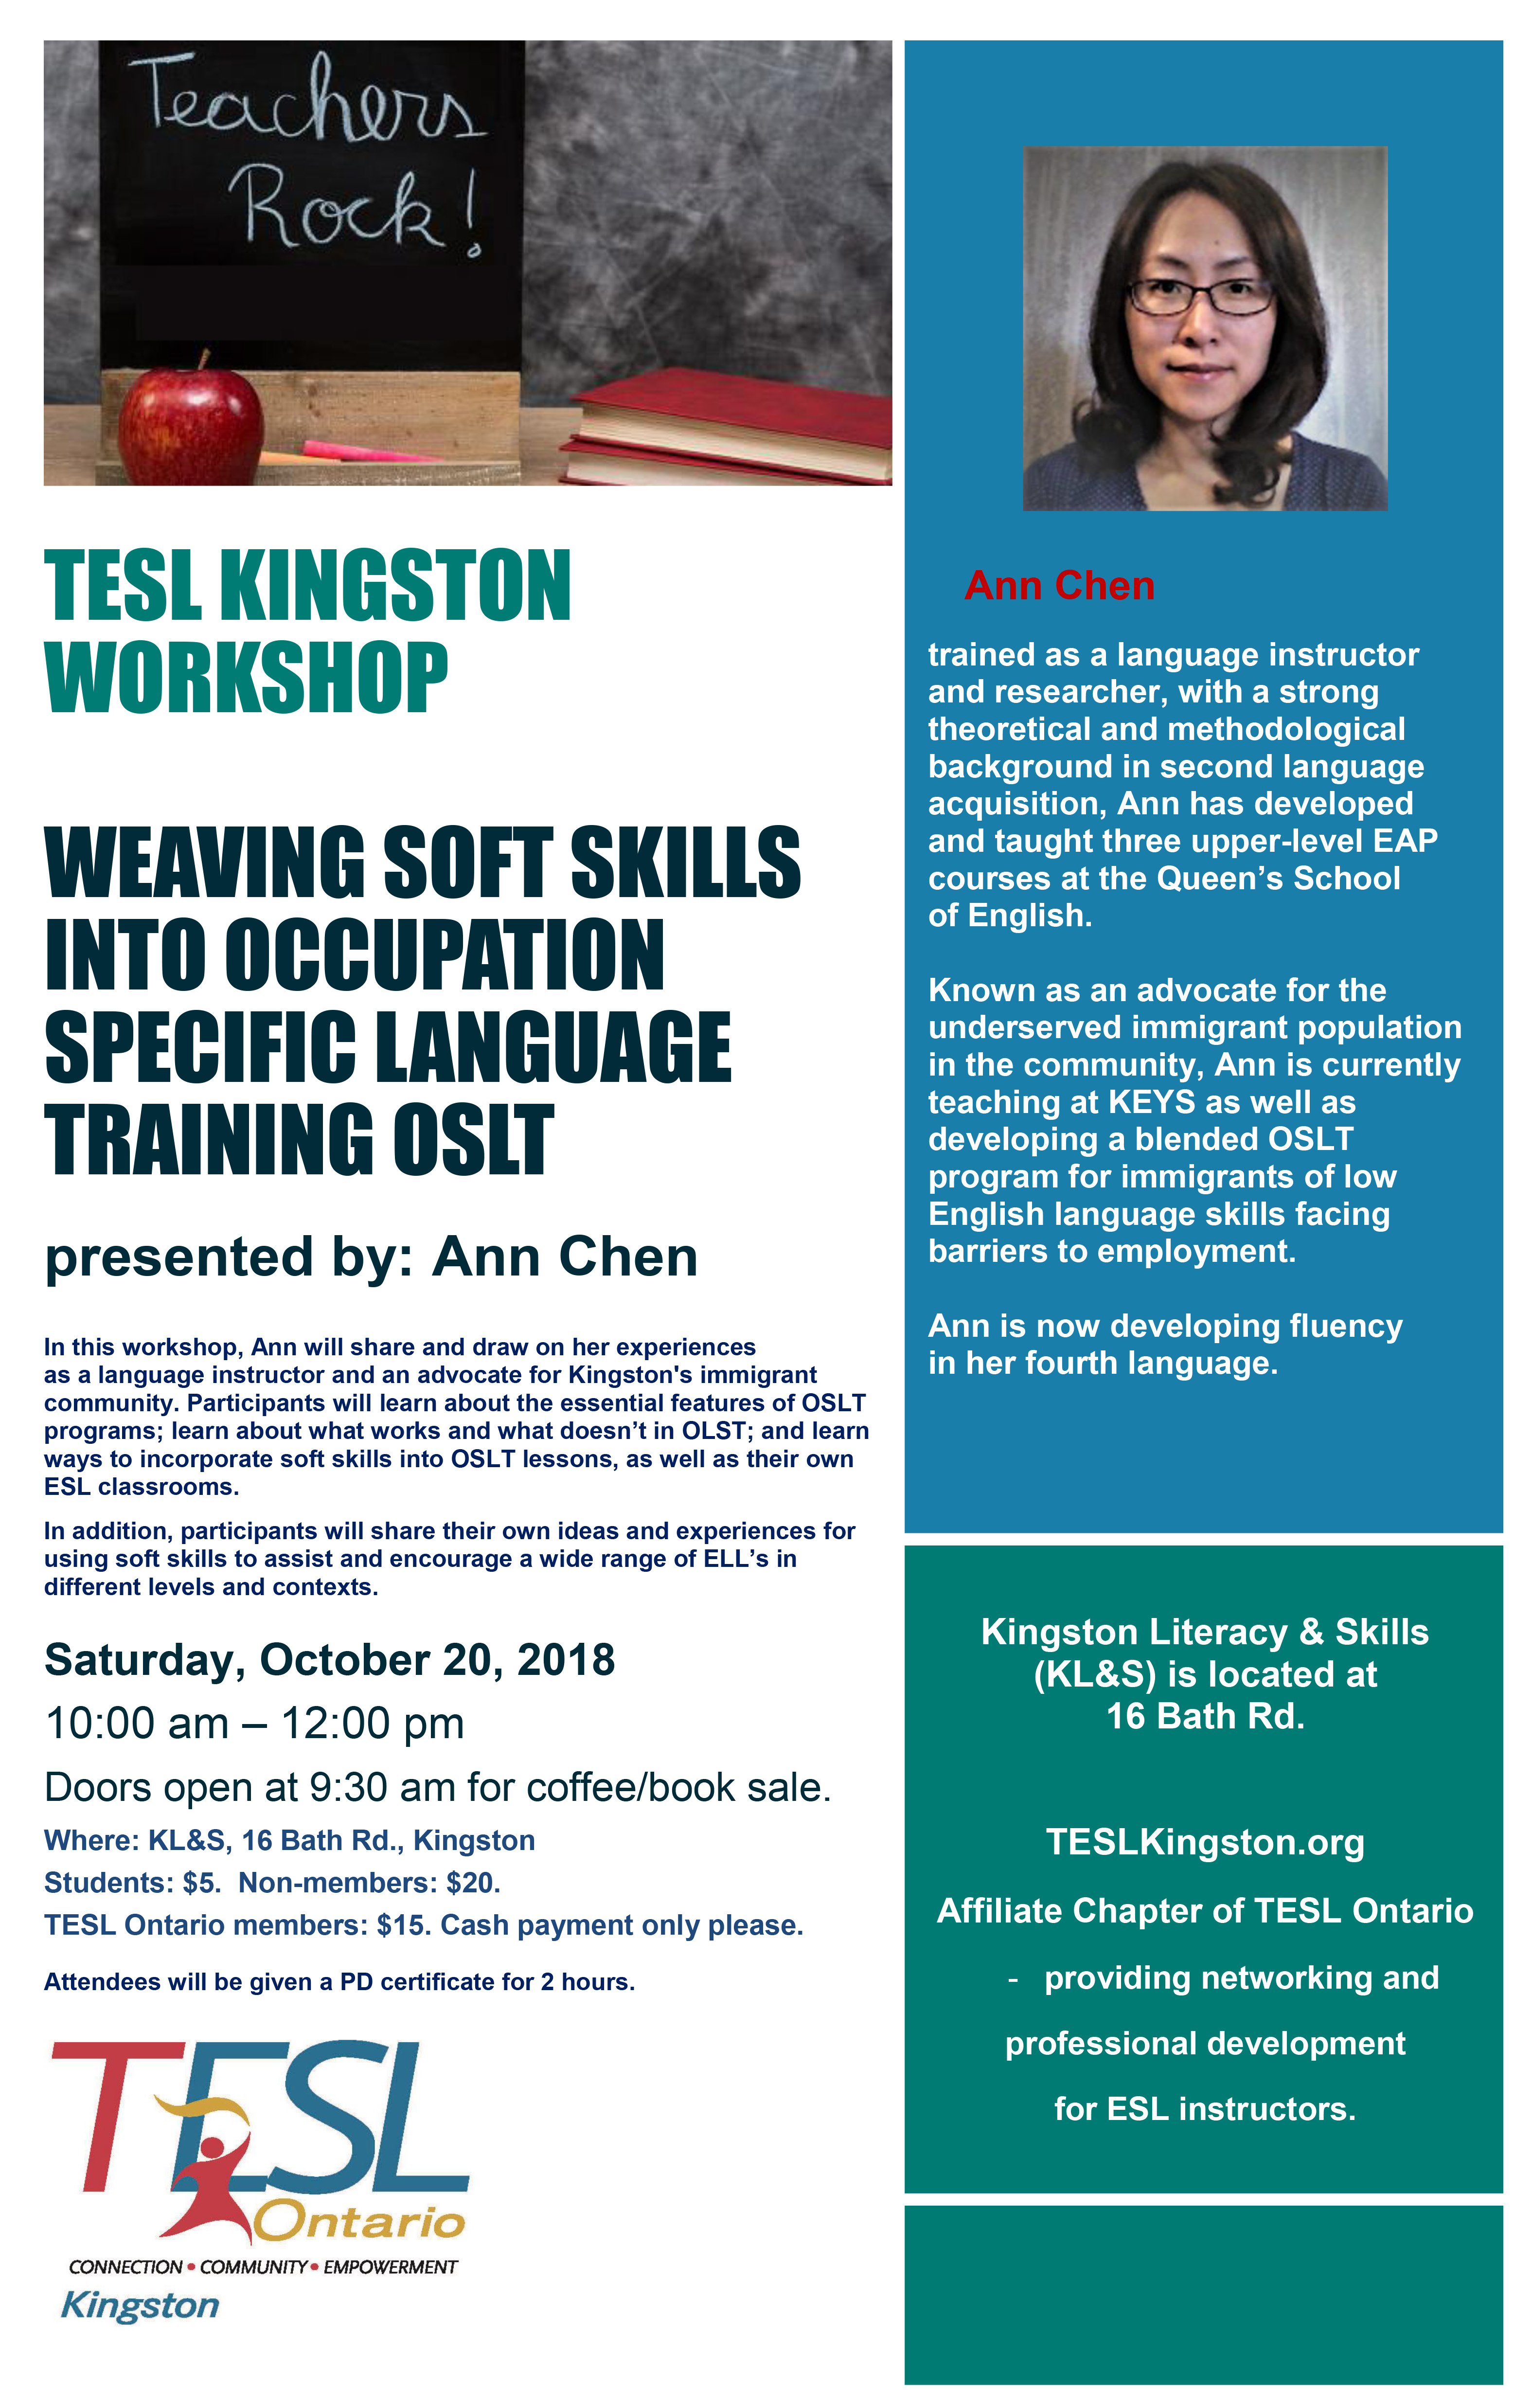 TESL Kingston Fall Workshop Poster-1